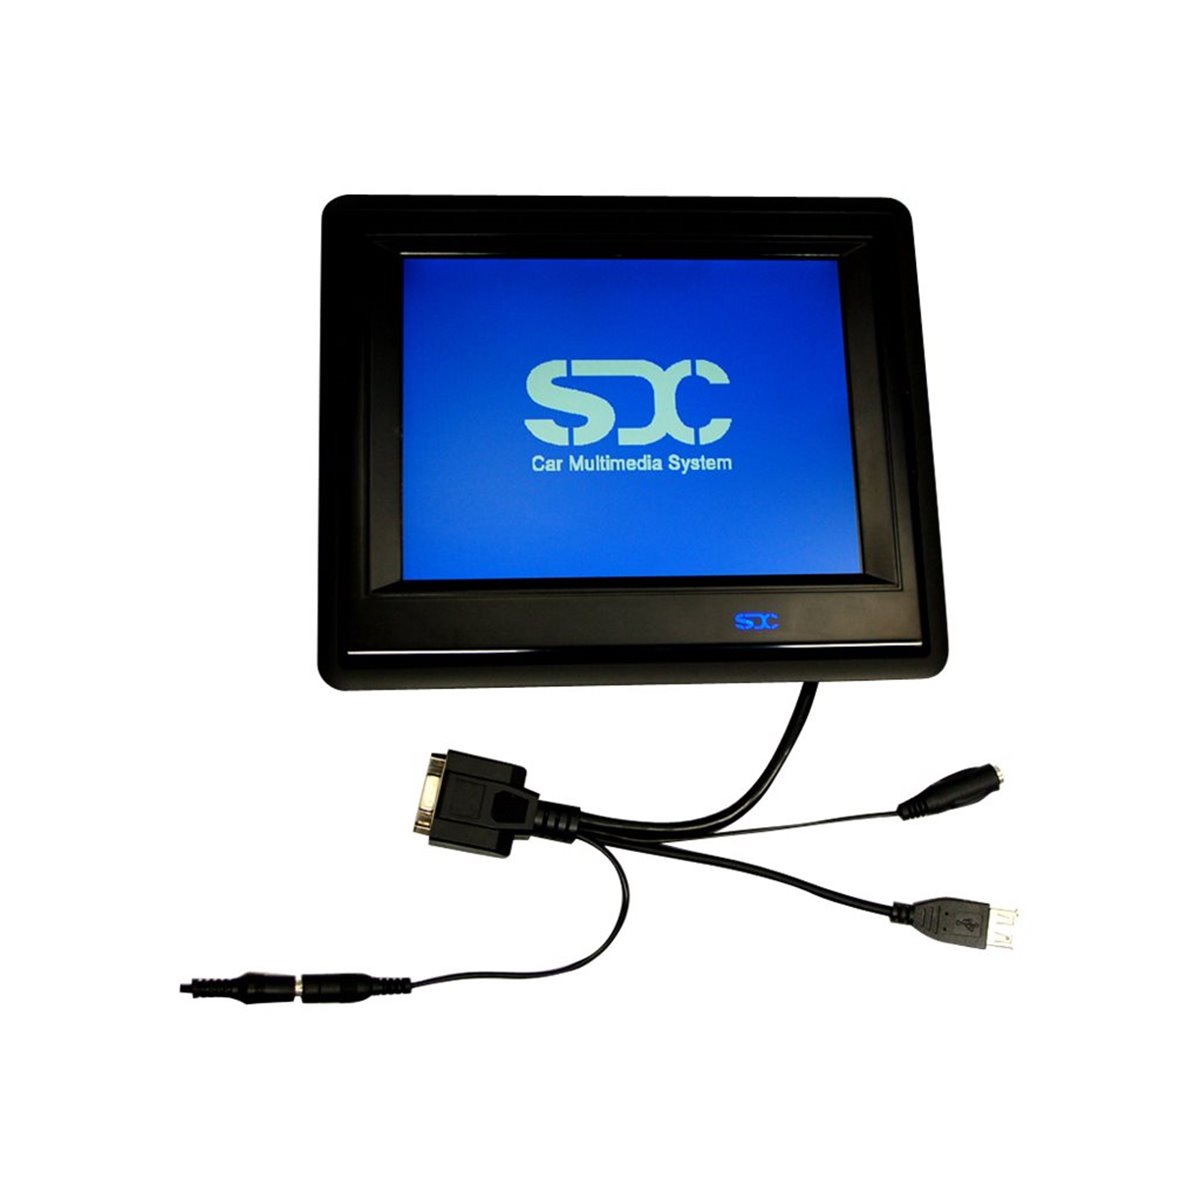 Smart Display Company TFT SDC 20.3cm 8 VGA T8H Touchscreen 1024x768 ein - Flat Screen - 20.3 cm